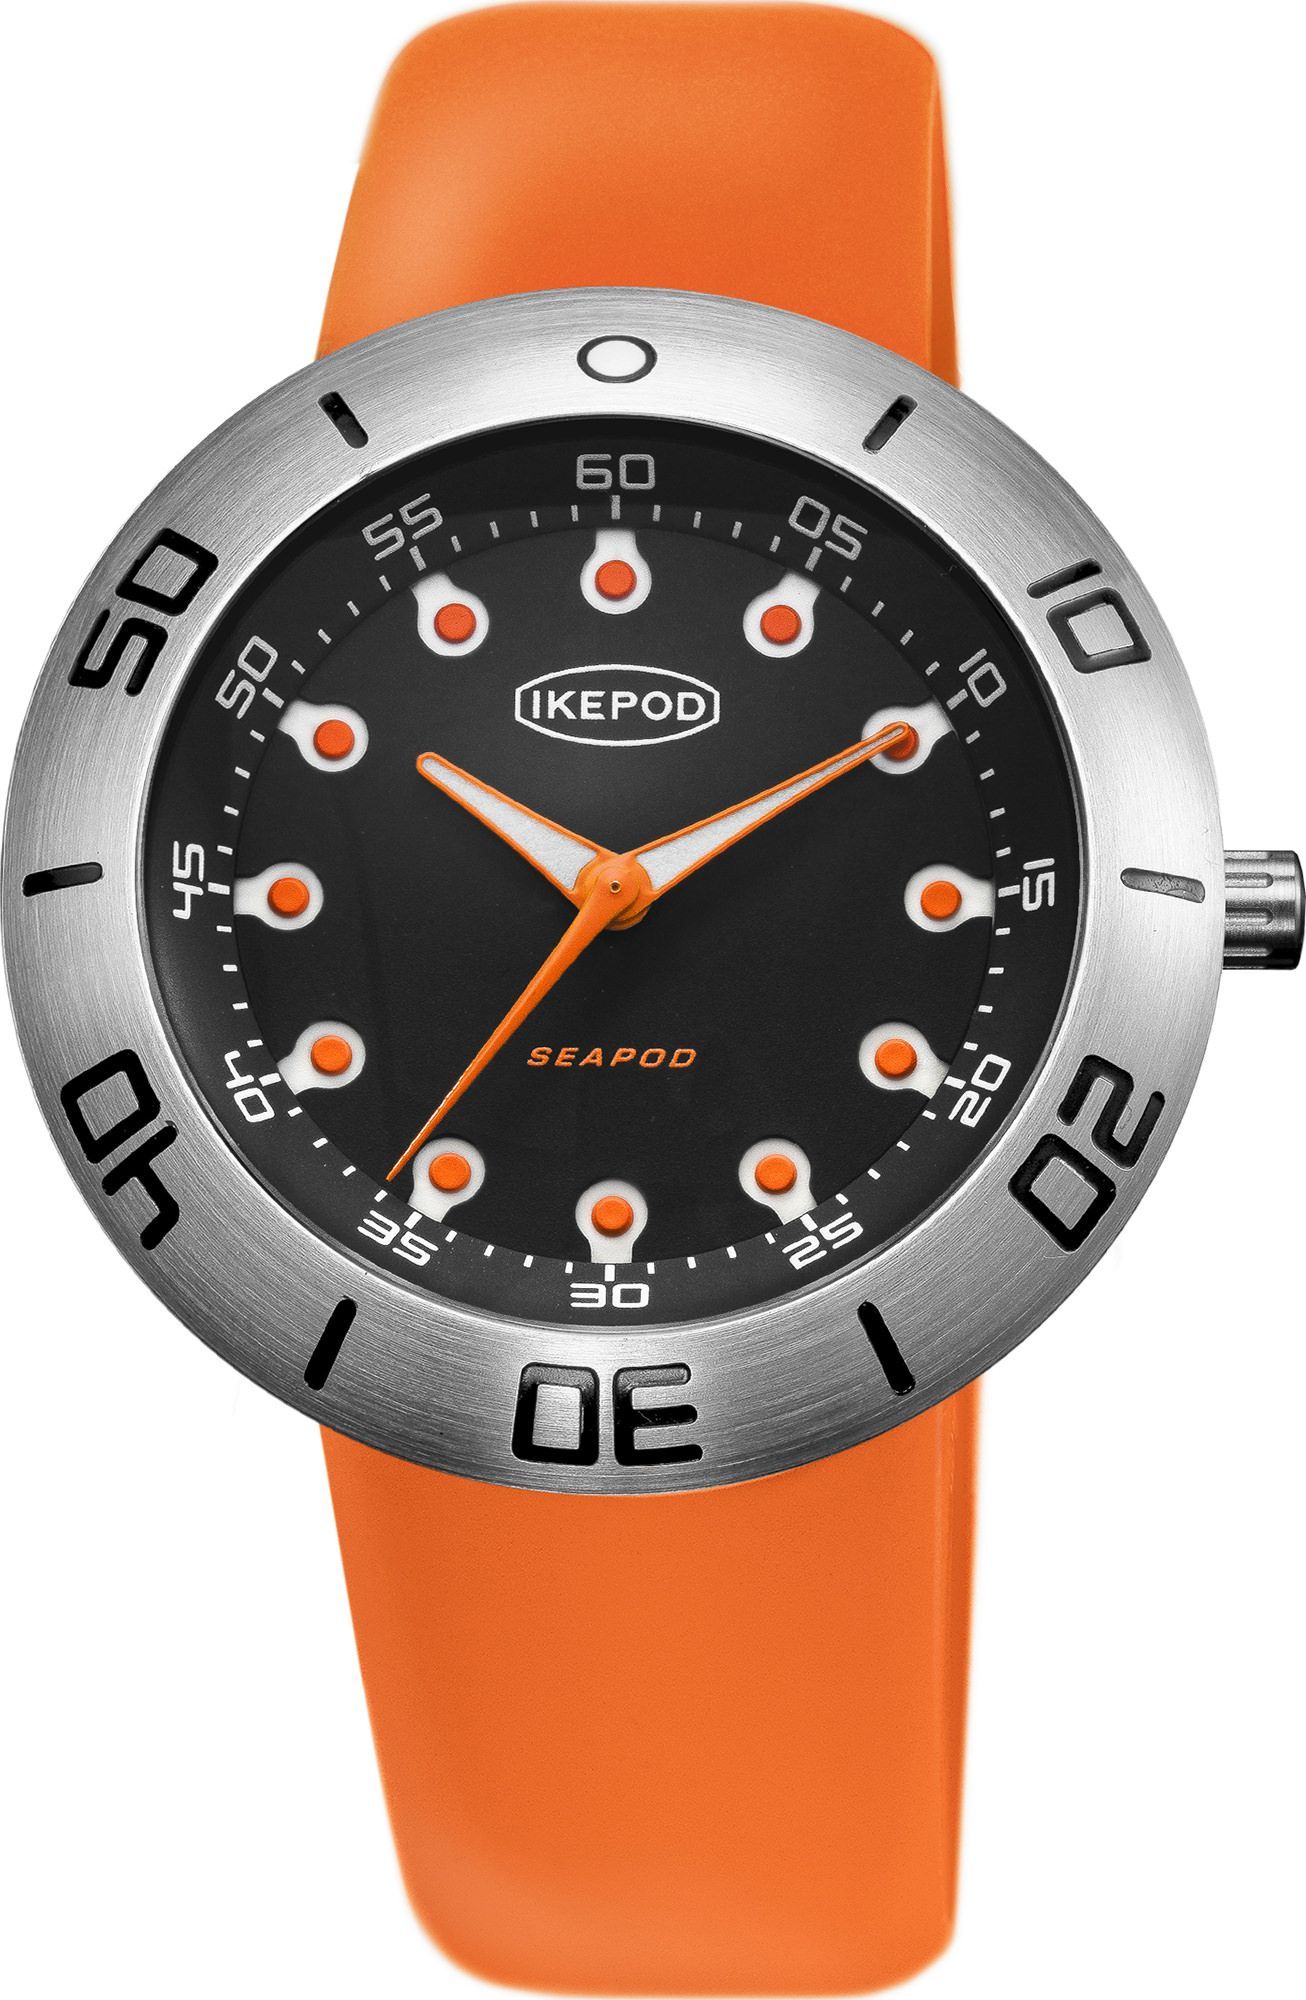 Ikepod Seapod  Grey Dial 46 mm Automatic Watch For Men - 1